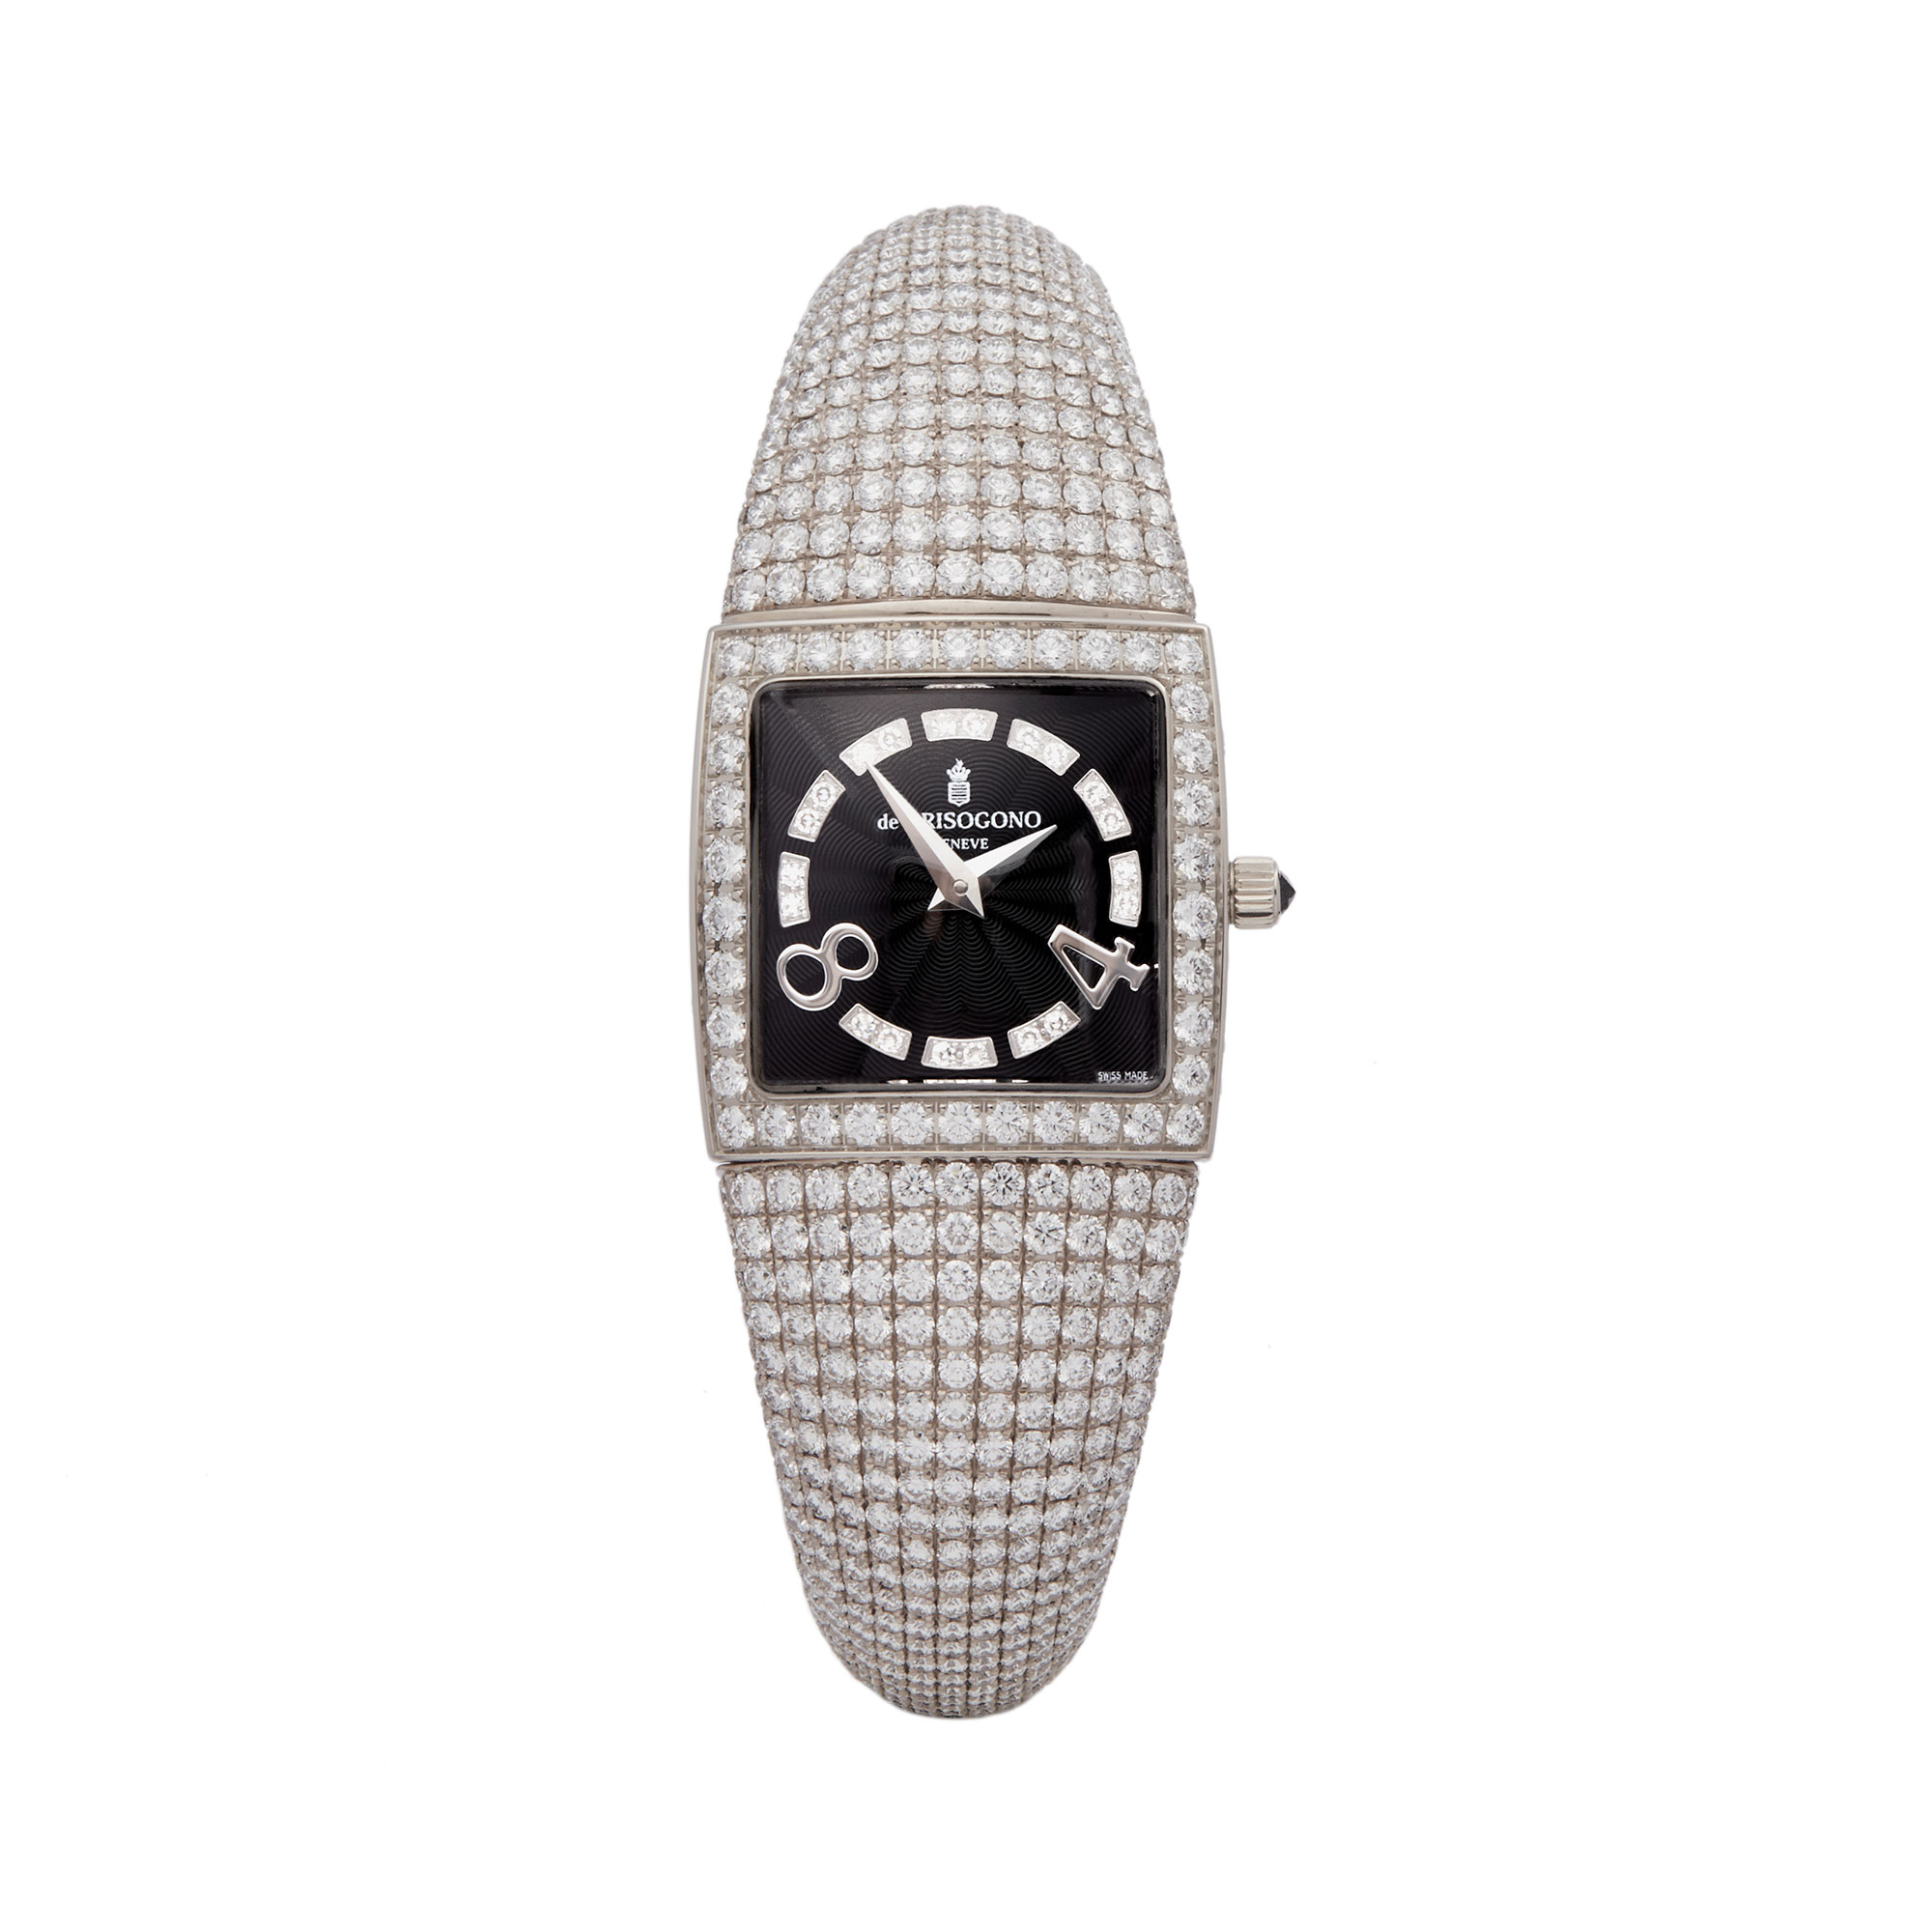 De Grisogono Piccolina S14B Ladies White Gold Diamond Watch - Image 8 of 8